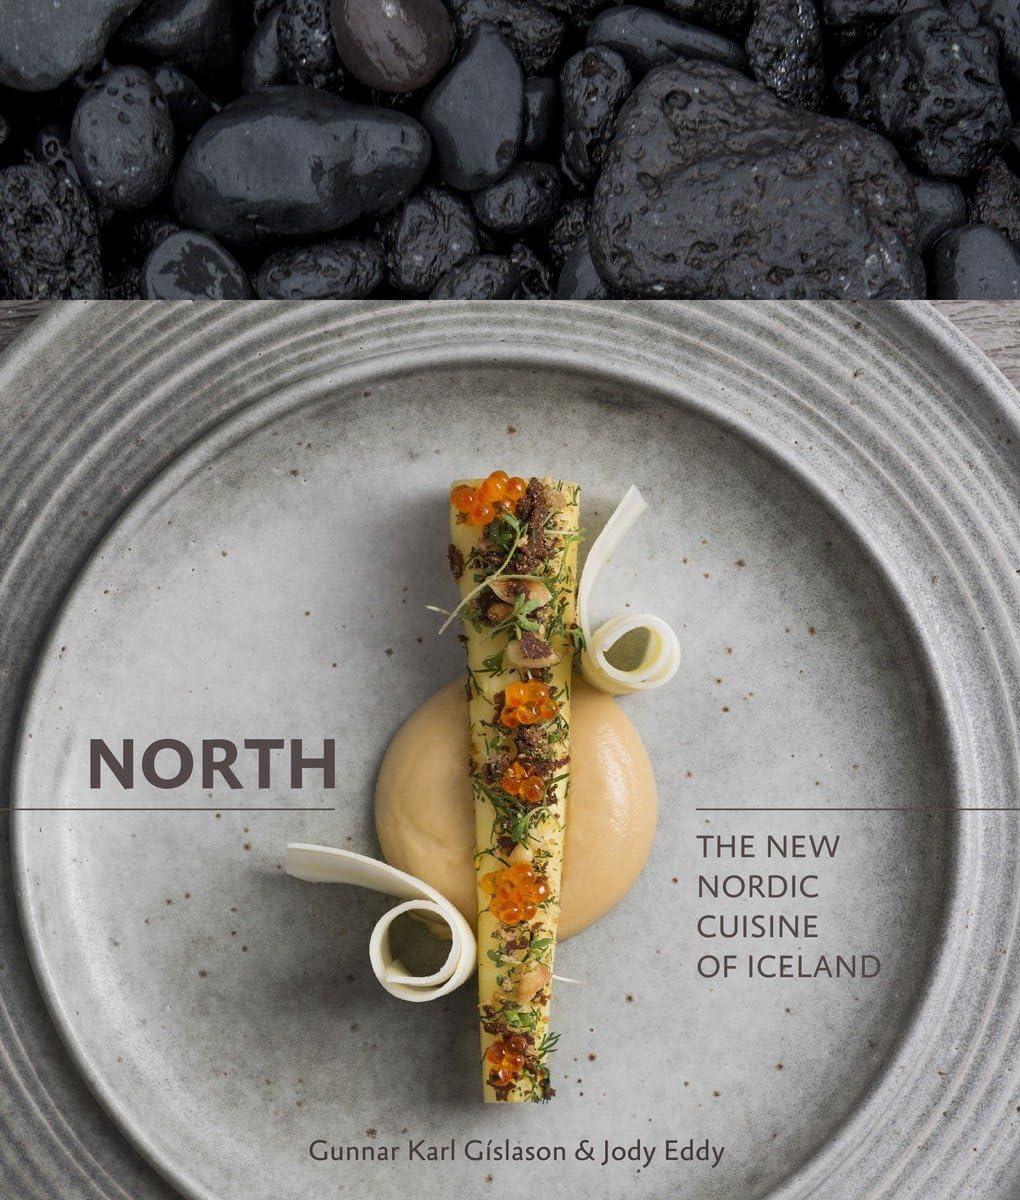 North: The New Nordic Cuisine of Iceland (Gunnar Karl Gíslason, Jody Eddy, Rene Redzepi)